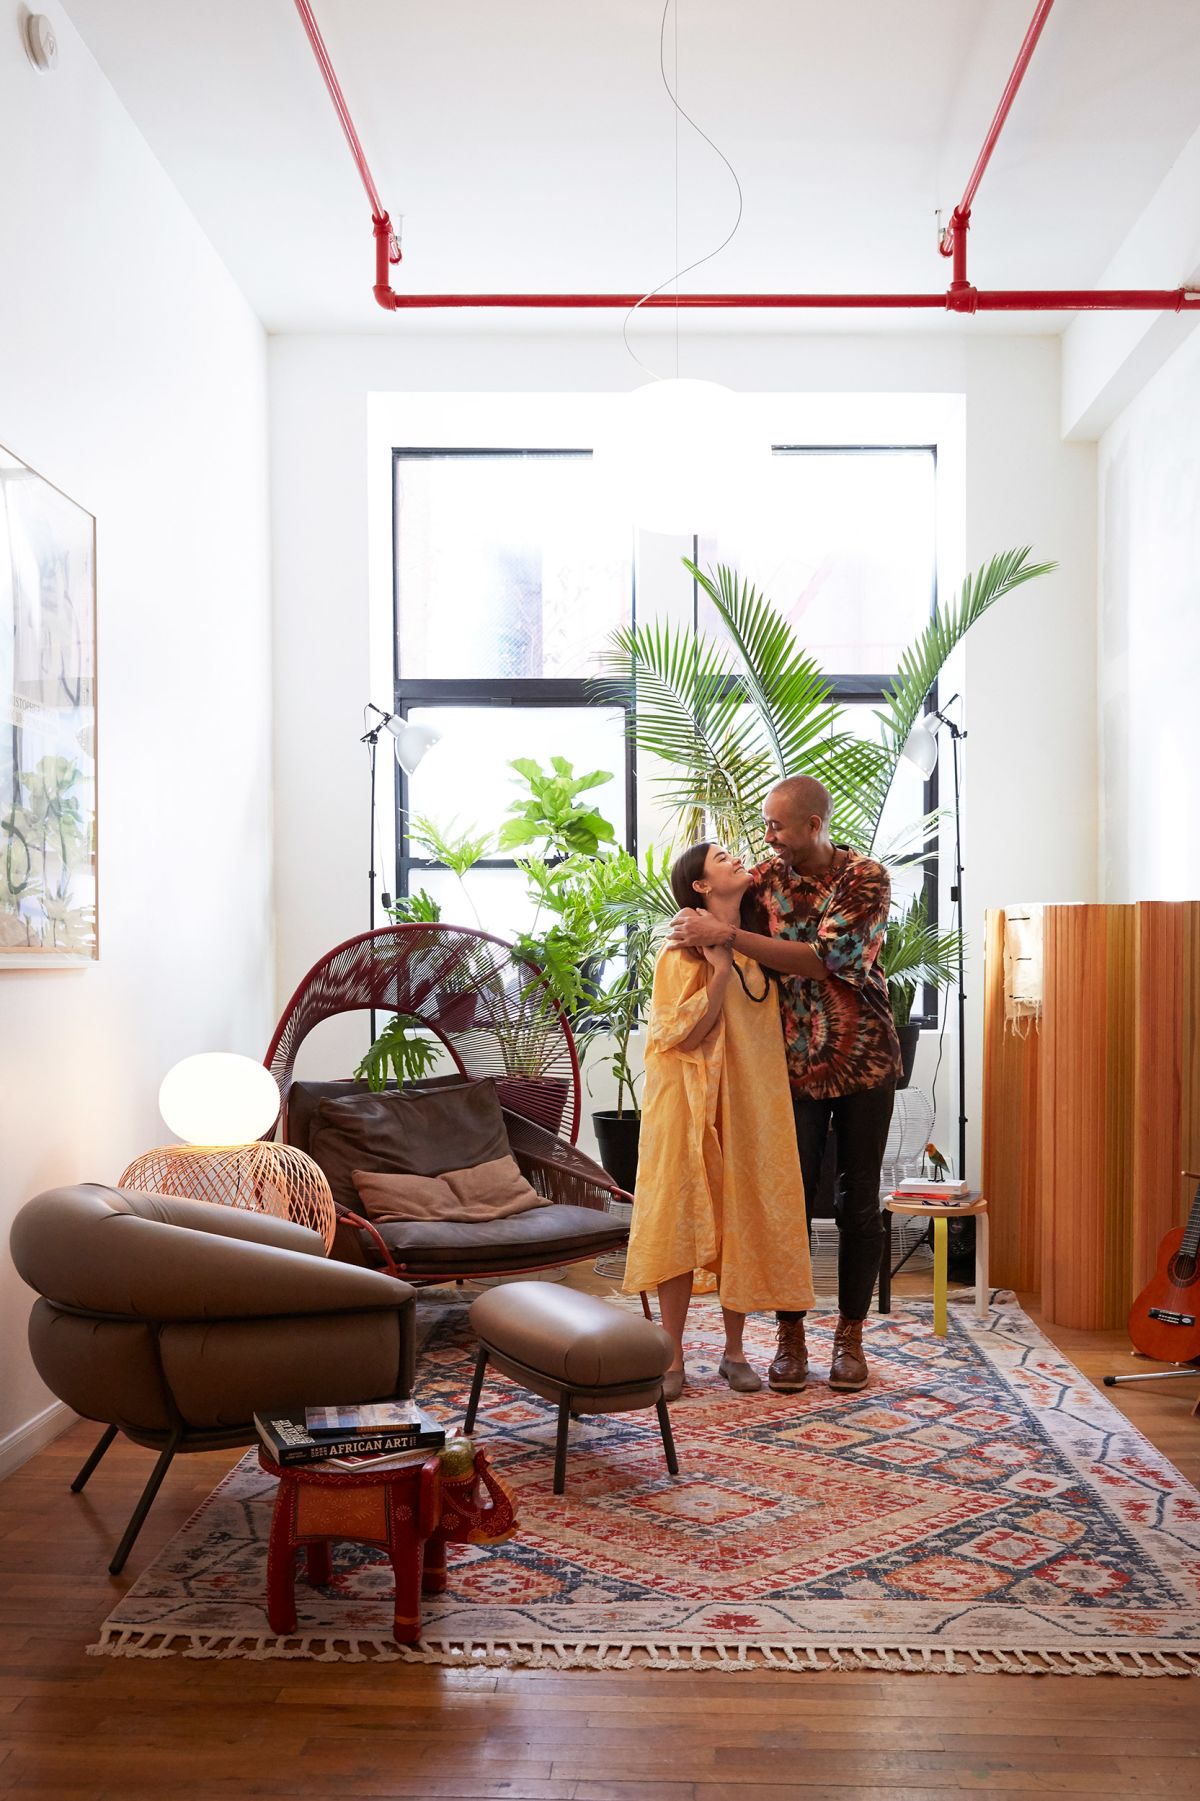 Designer Stephen Burks and his partner Malika at their Brooklyn home